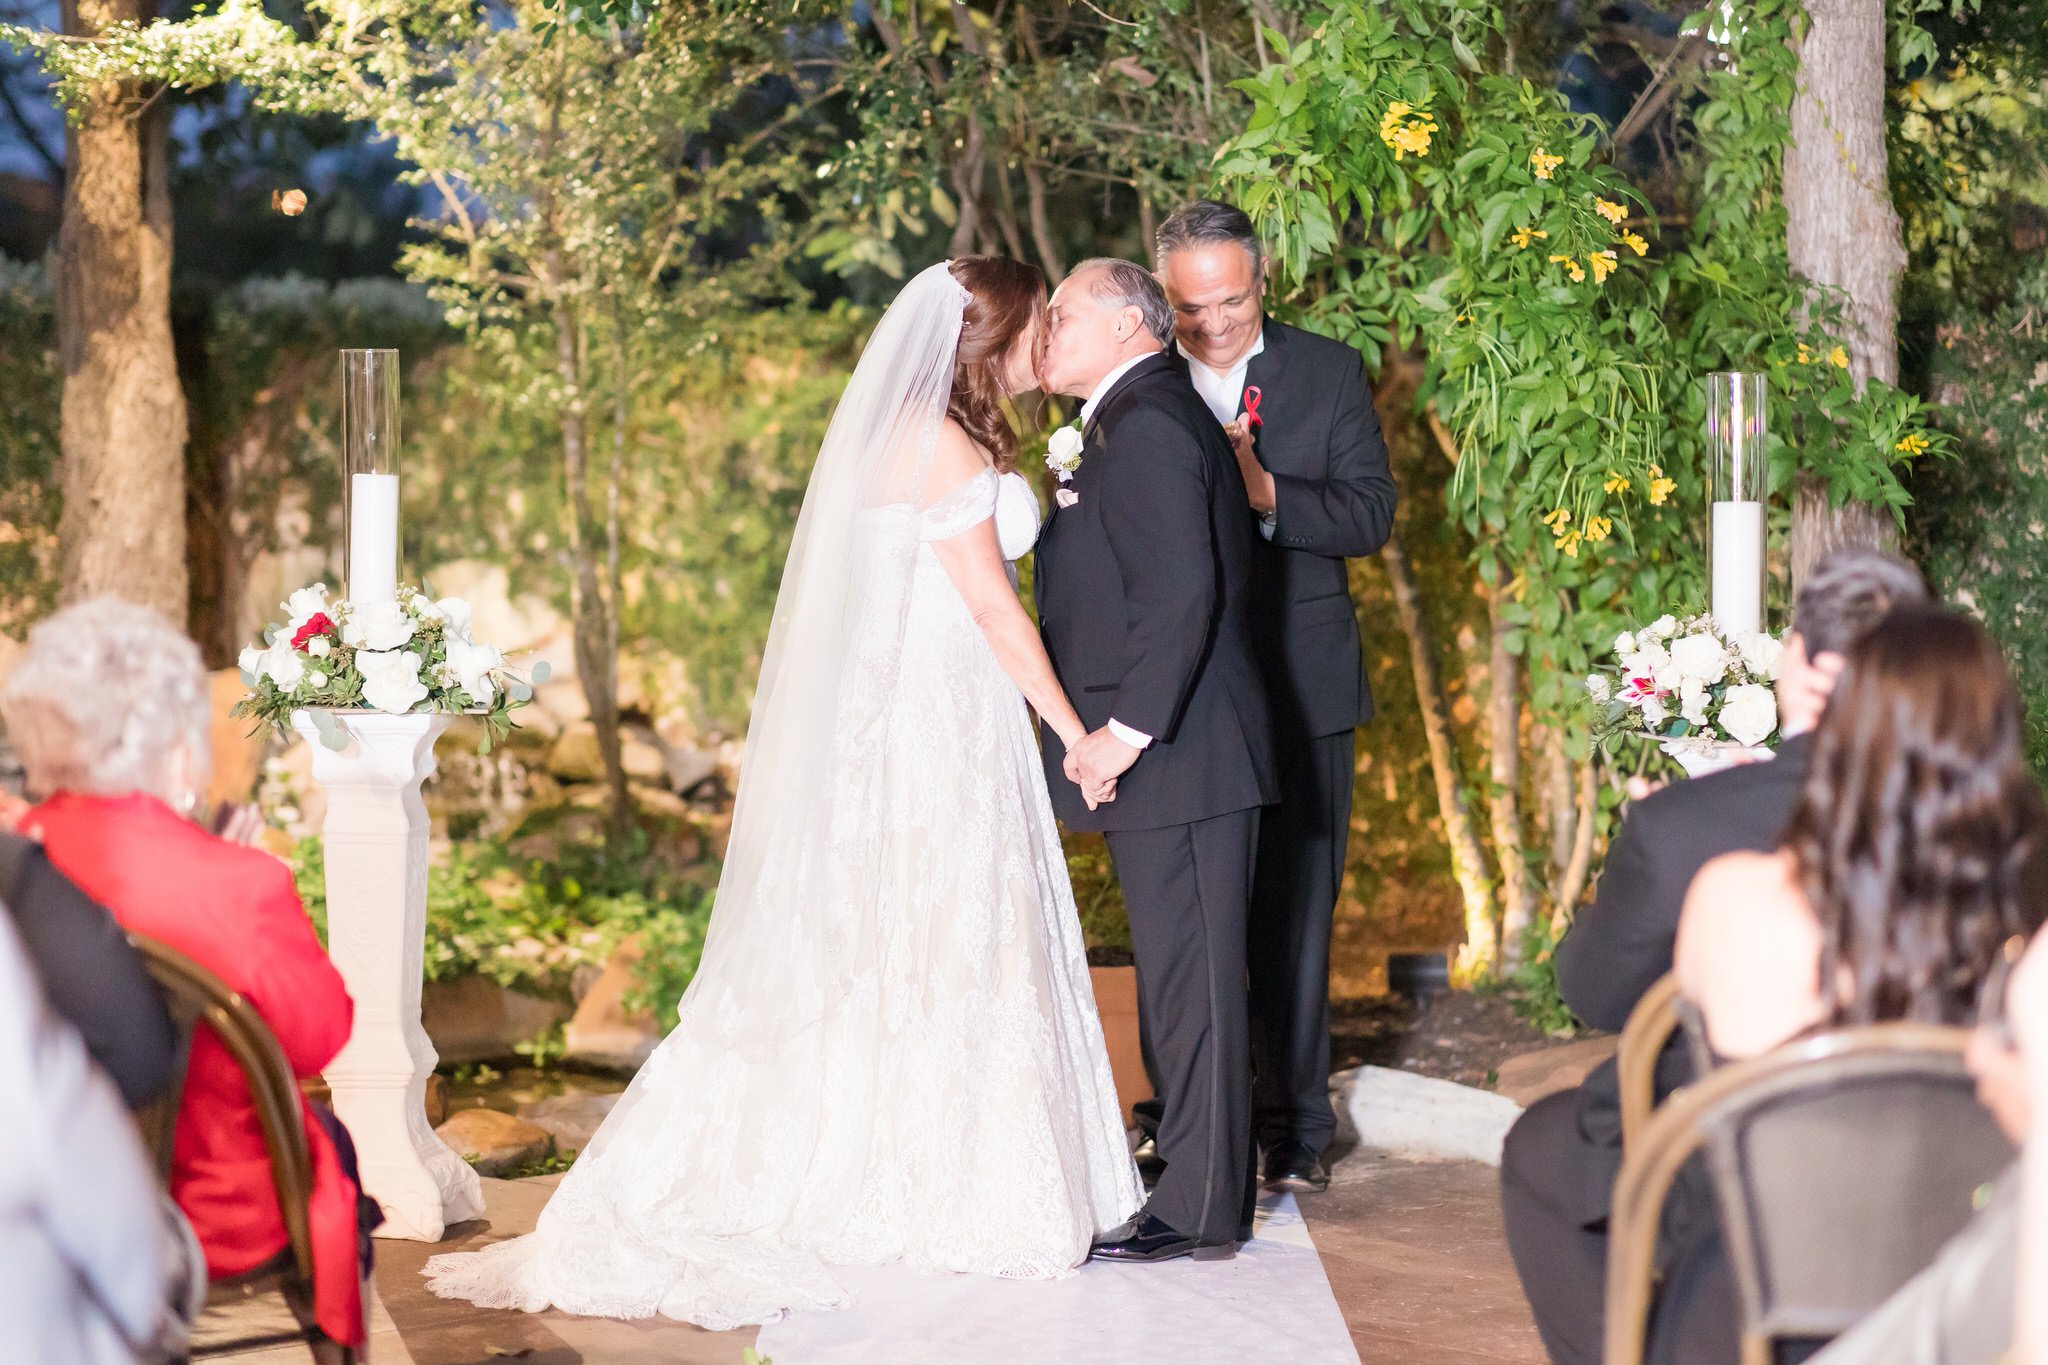 An Intimate Wedding at Paesanos 1604 in San Antonio, TX by Dawn Elizabeth Studios, San Antonio Wedding Photographer